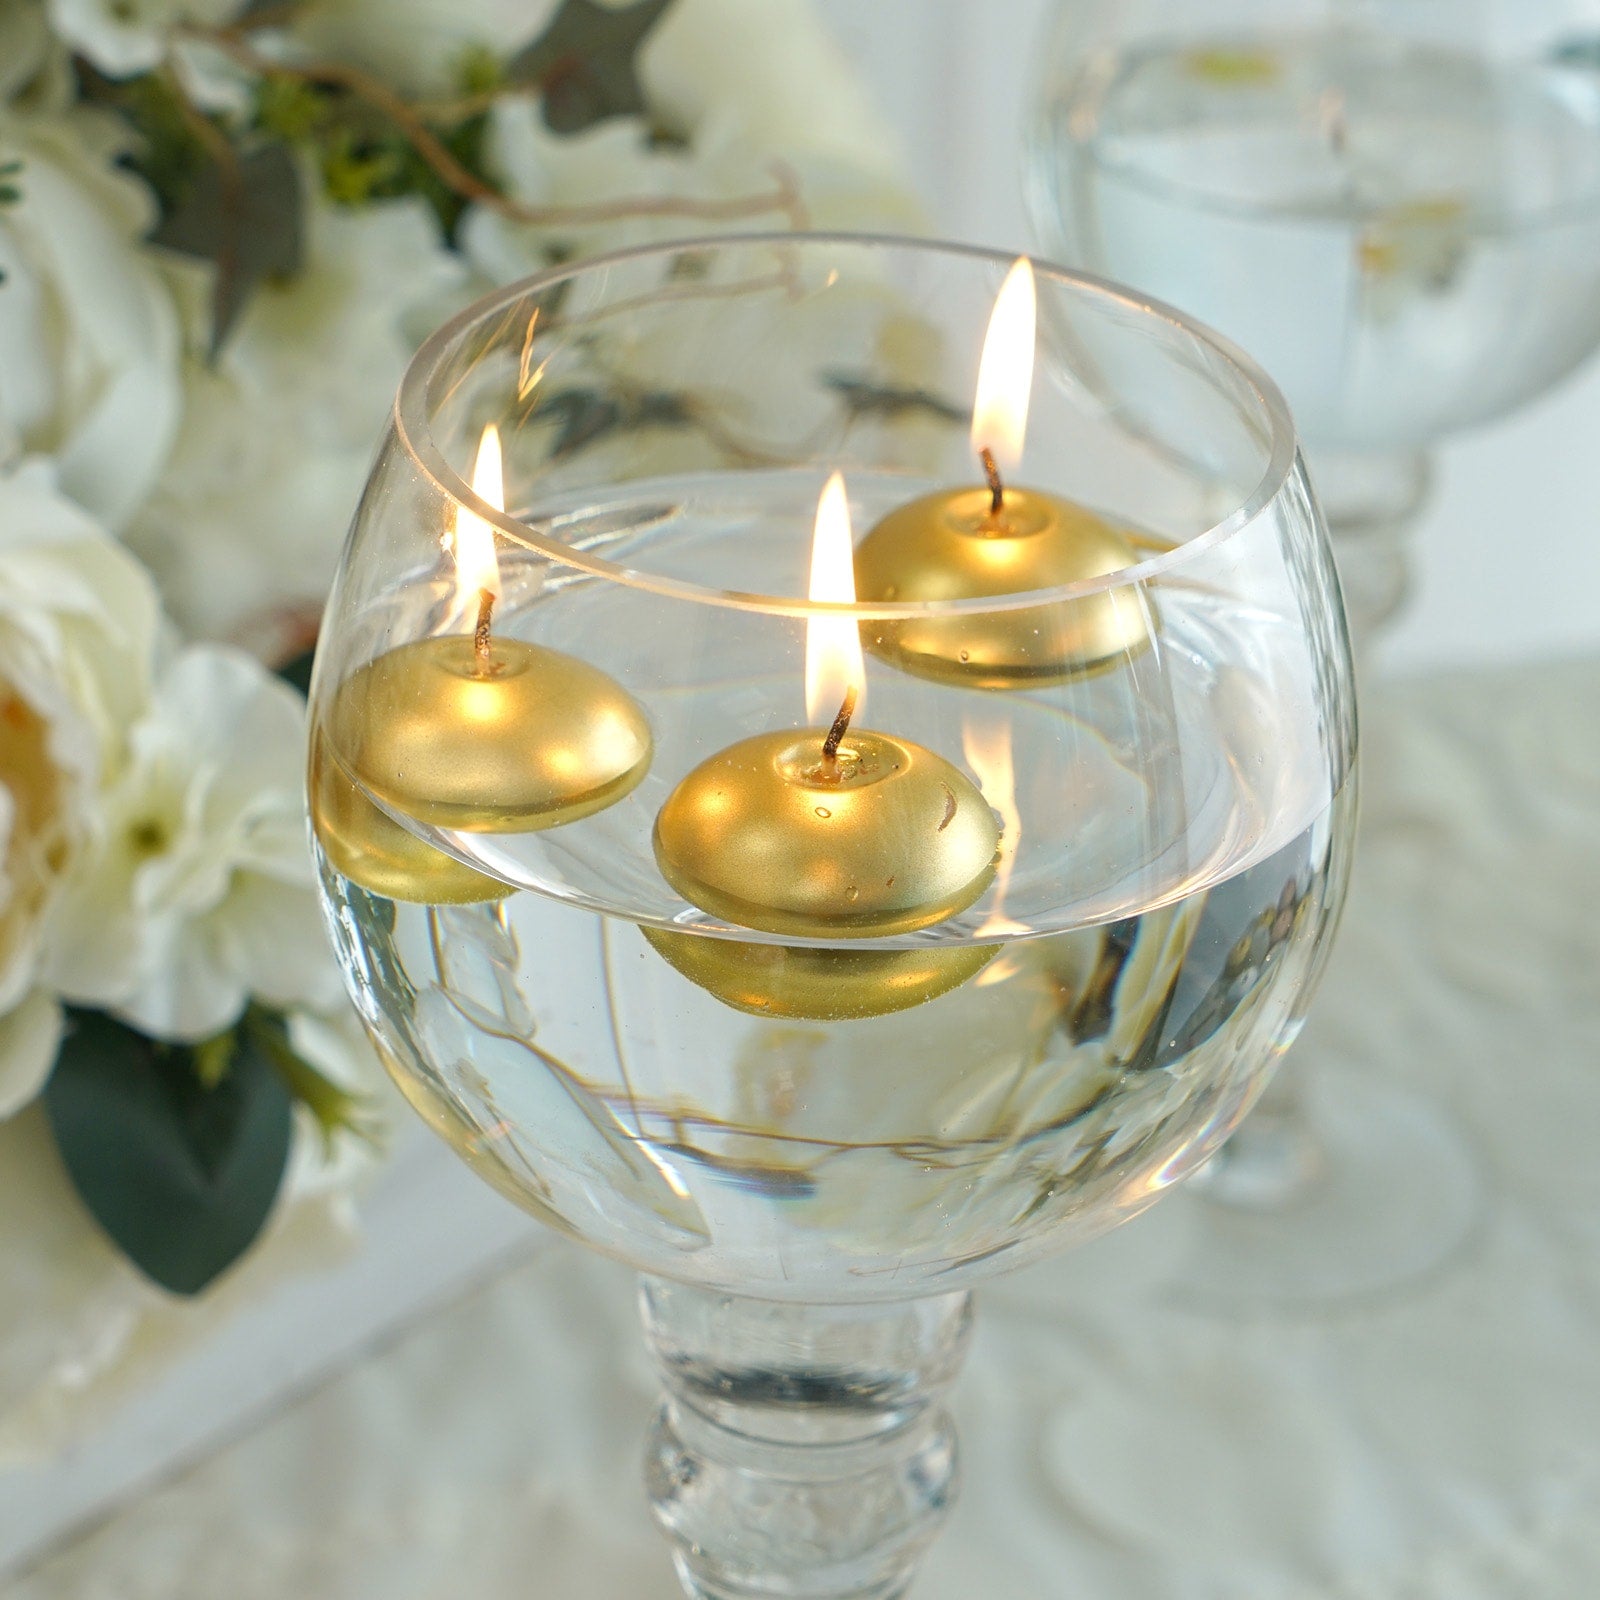 1.5 Metallic Gold Tea Light Candles, Unscented Candles, Tea Lights